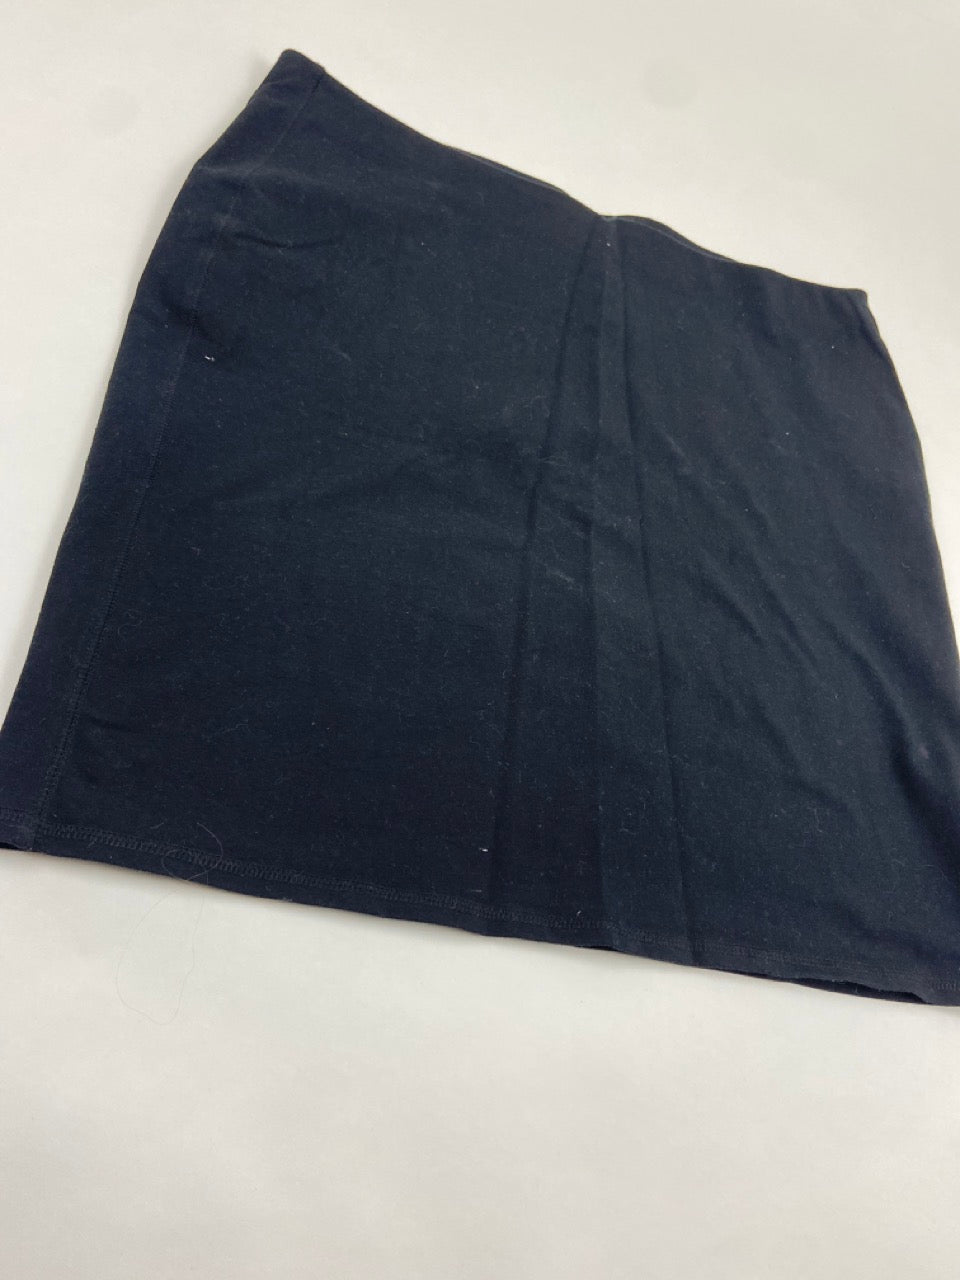 Black Cotton/Spandex Blend Mini Skirt - XL